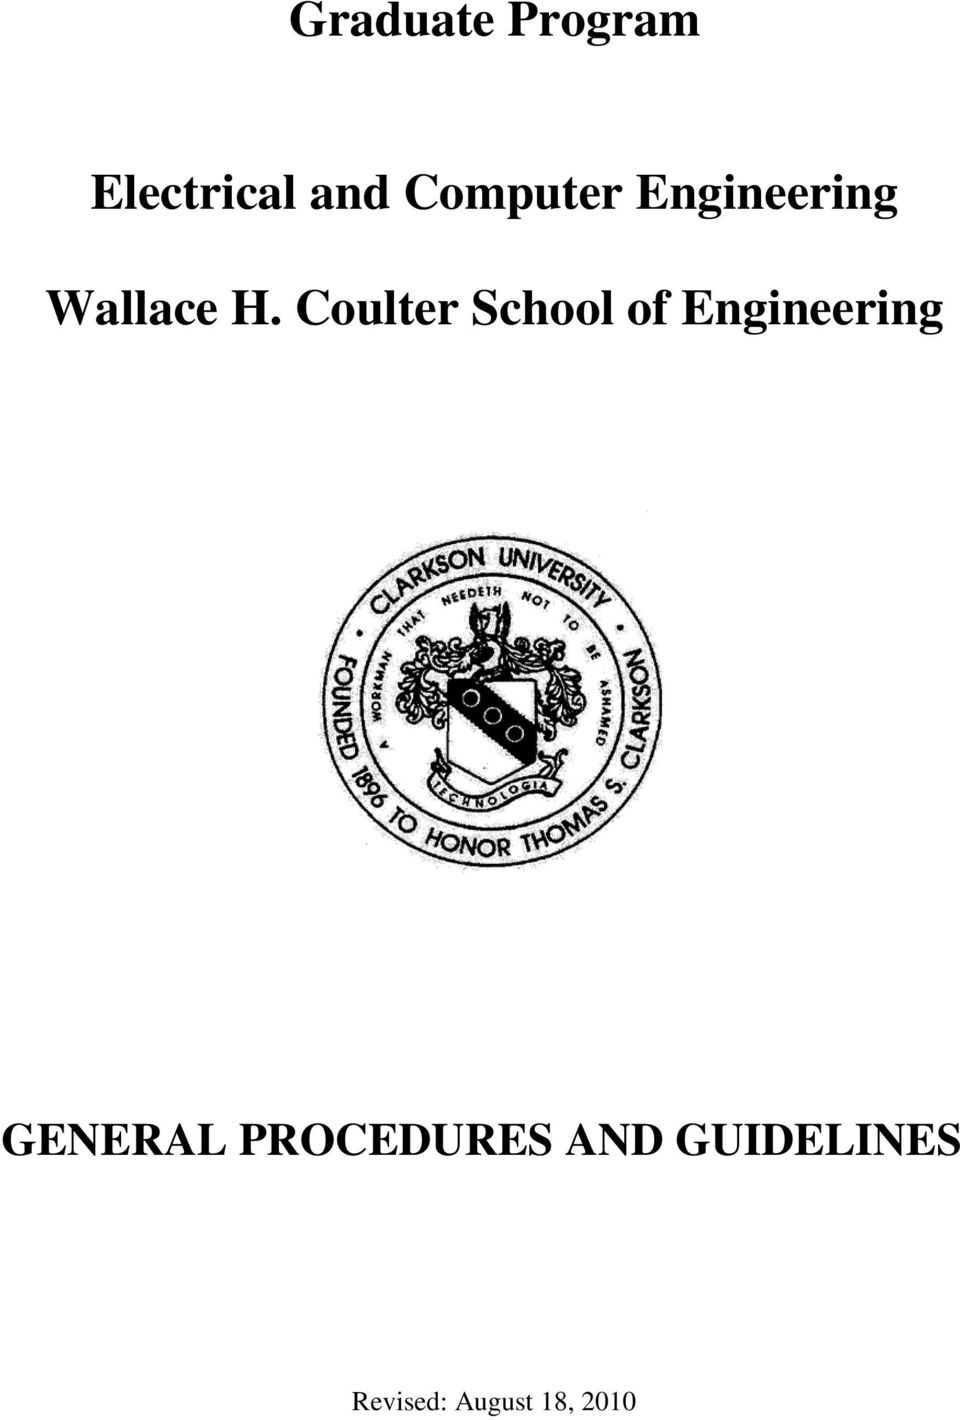 Coulter School of Engineering GENERAL